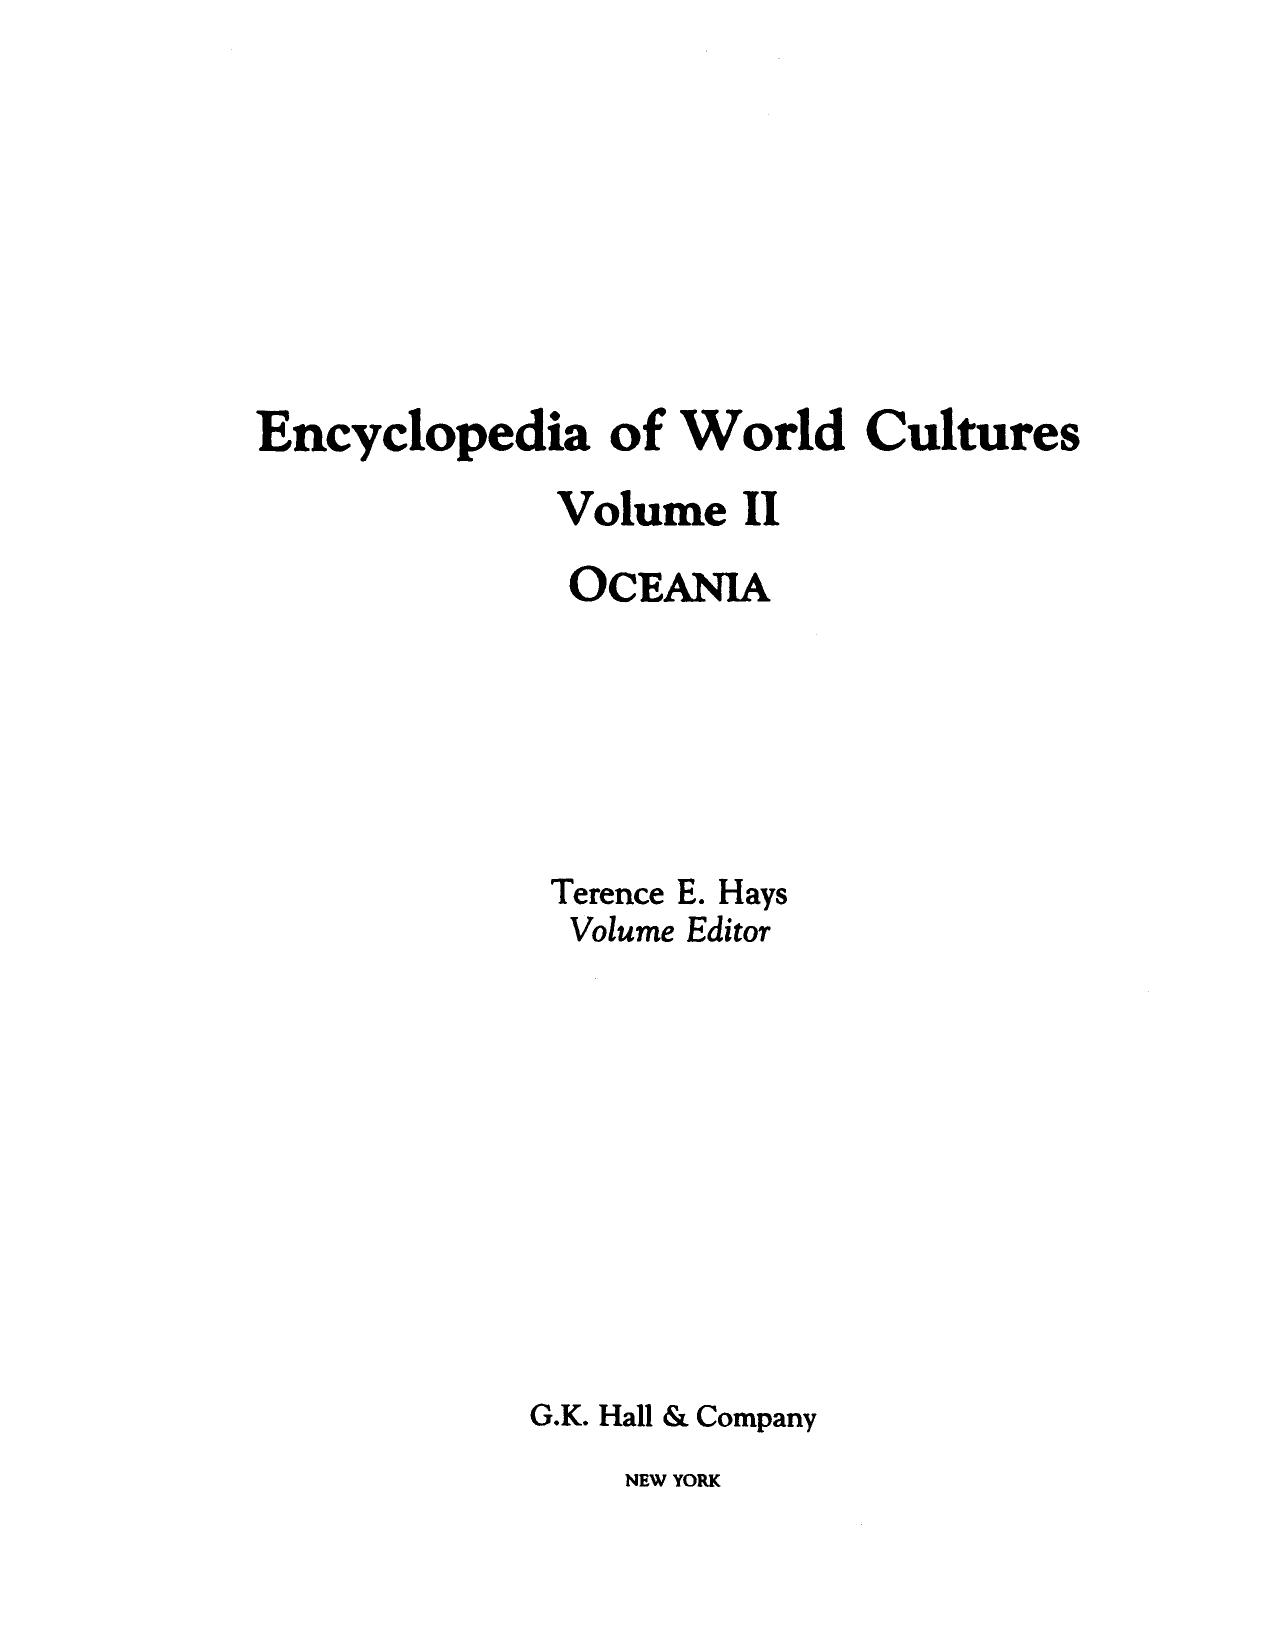 Encyclopedia of World Cultures: Oceania